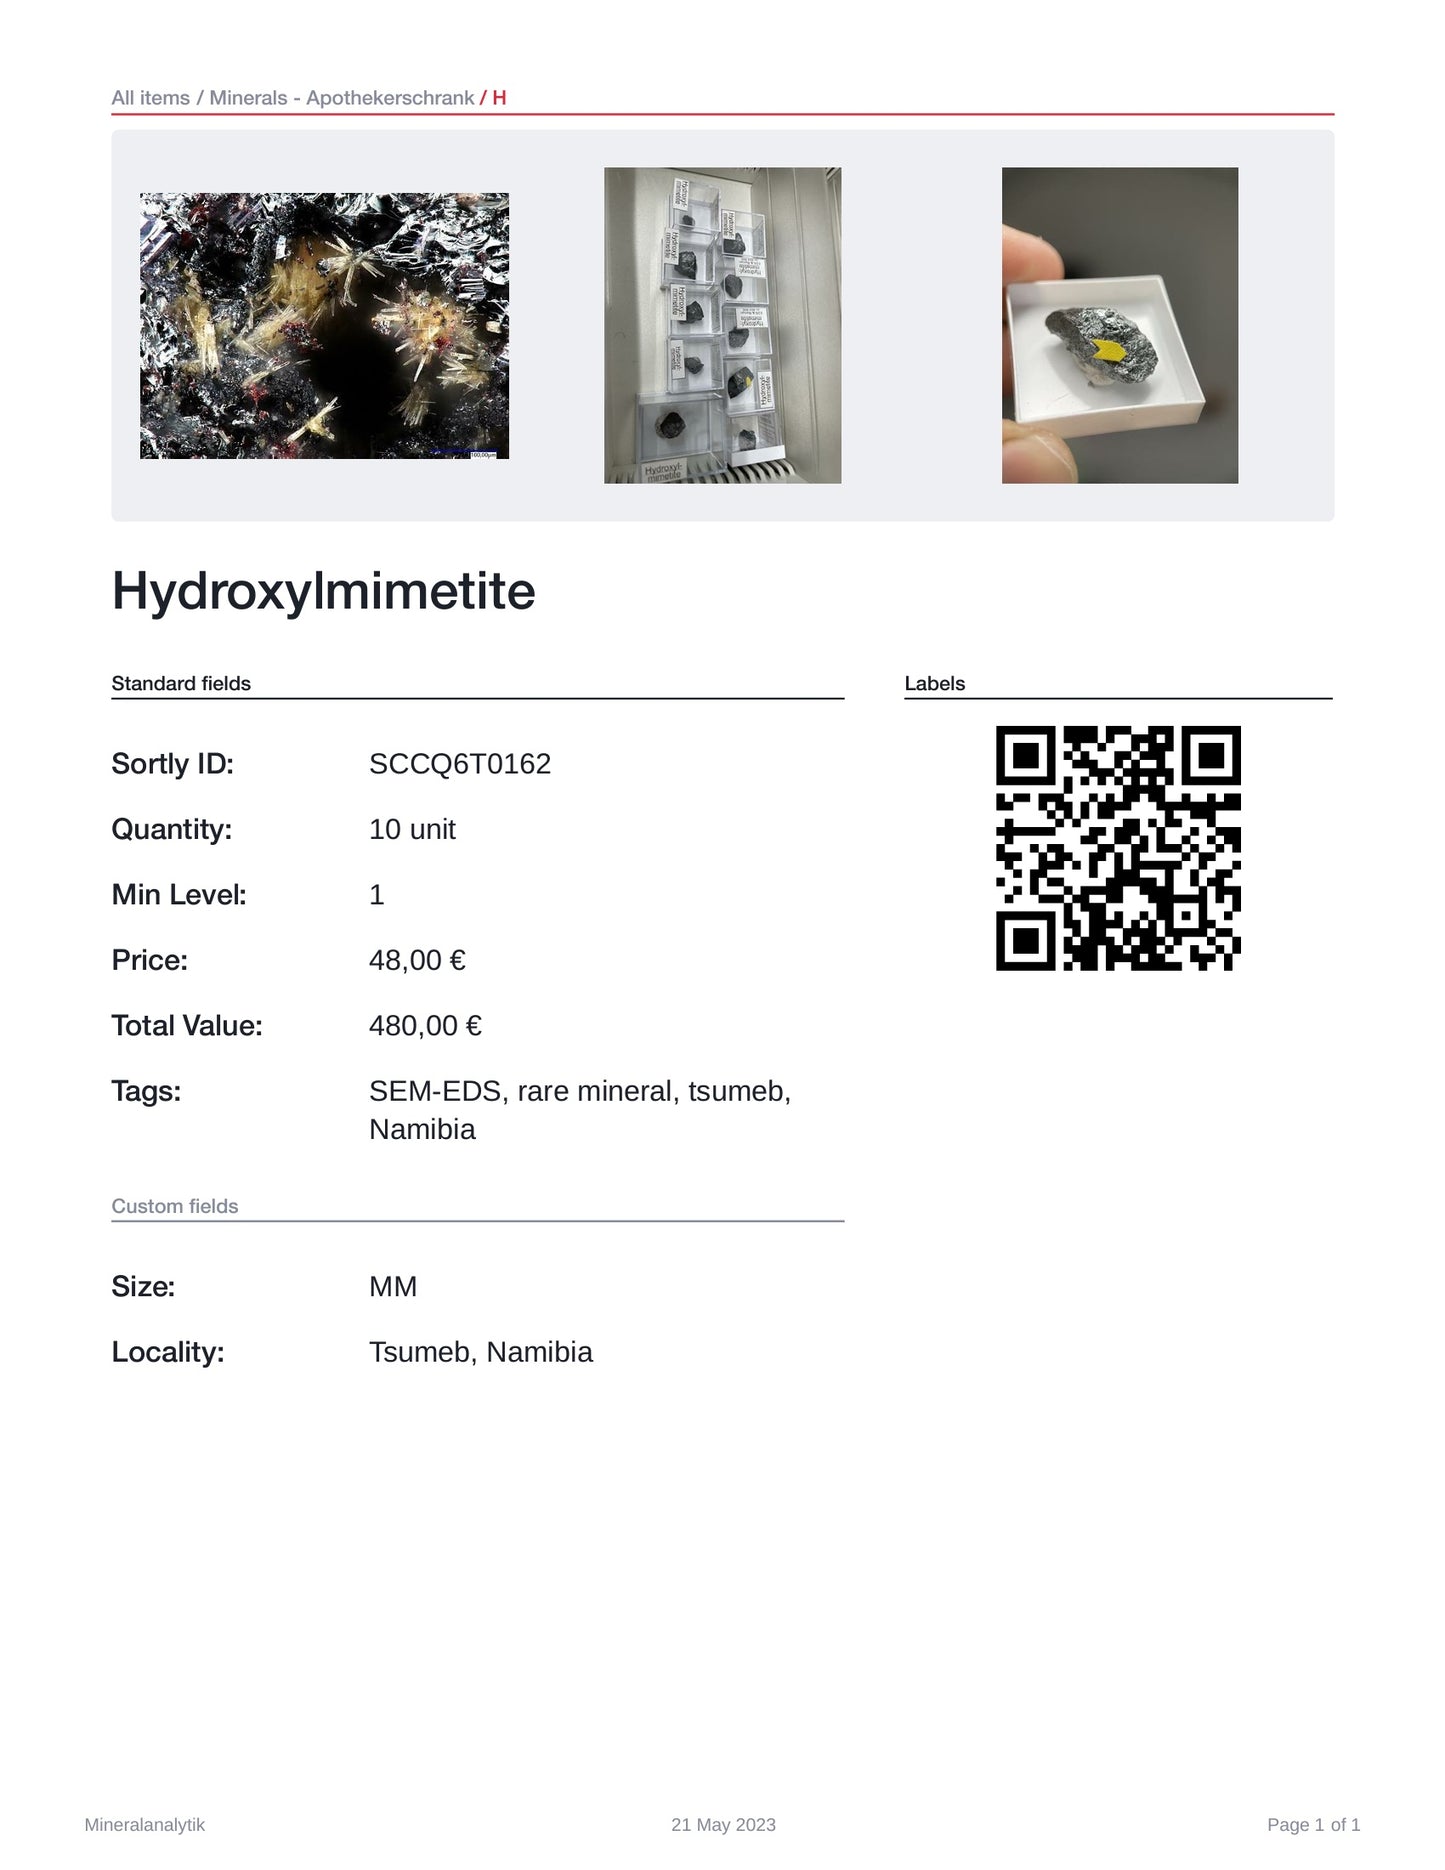 Hydroxylmimetite